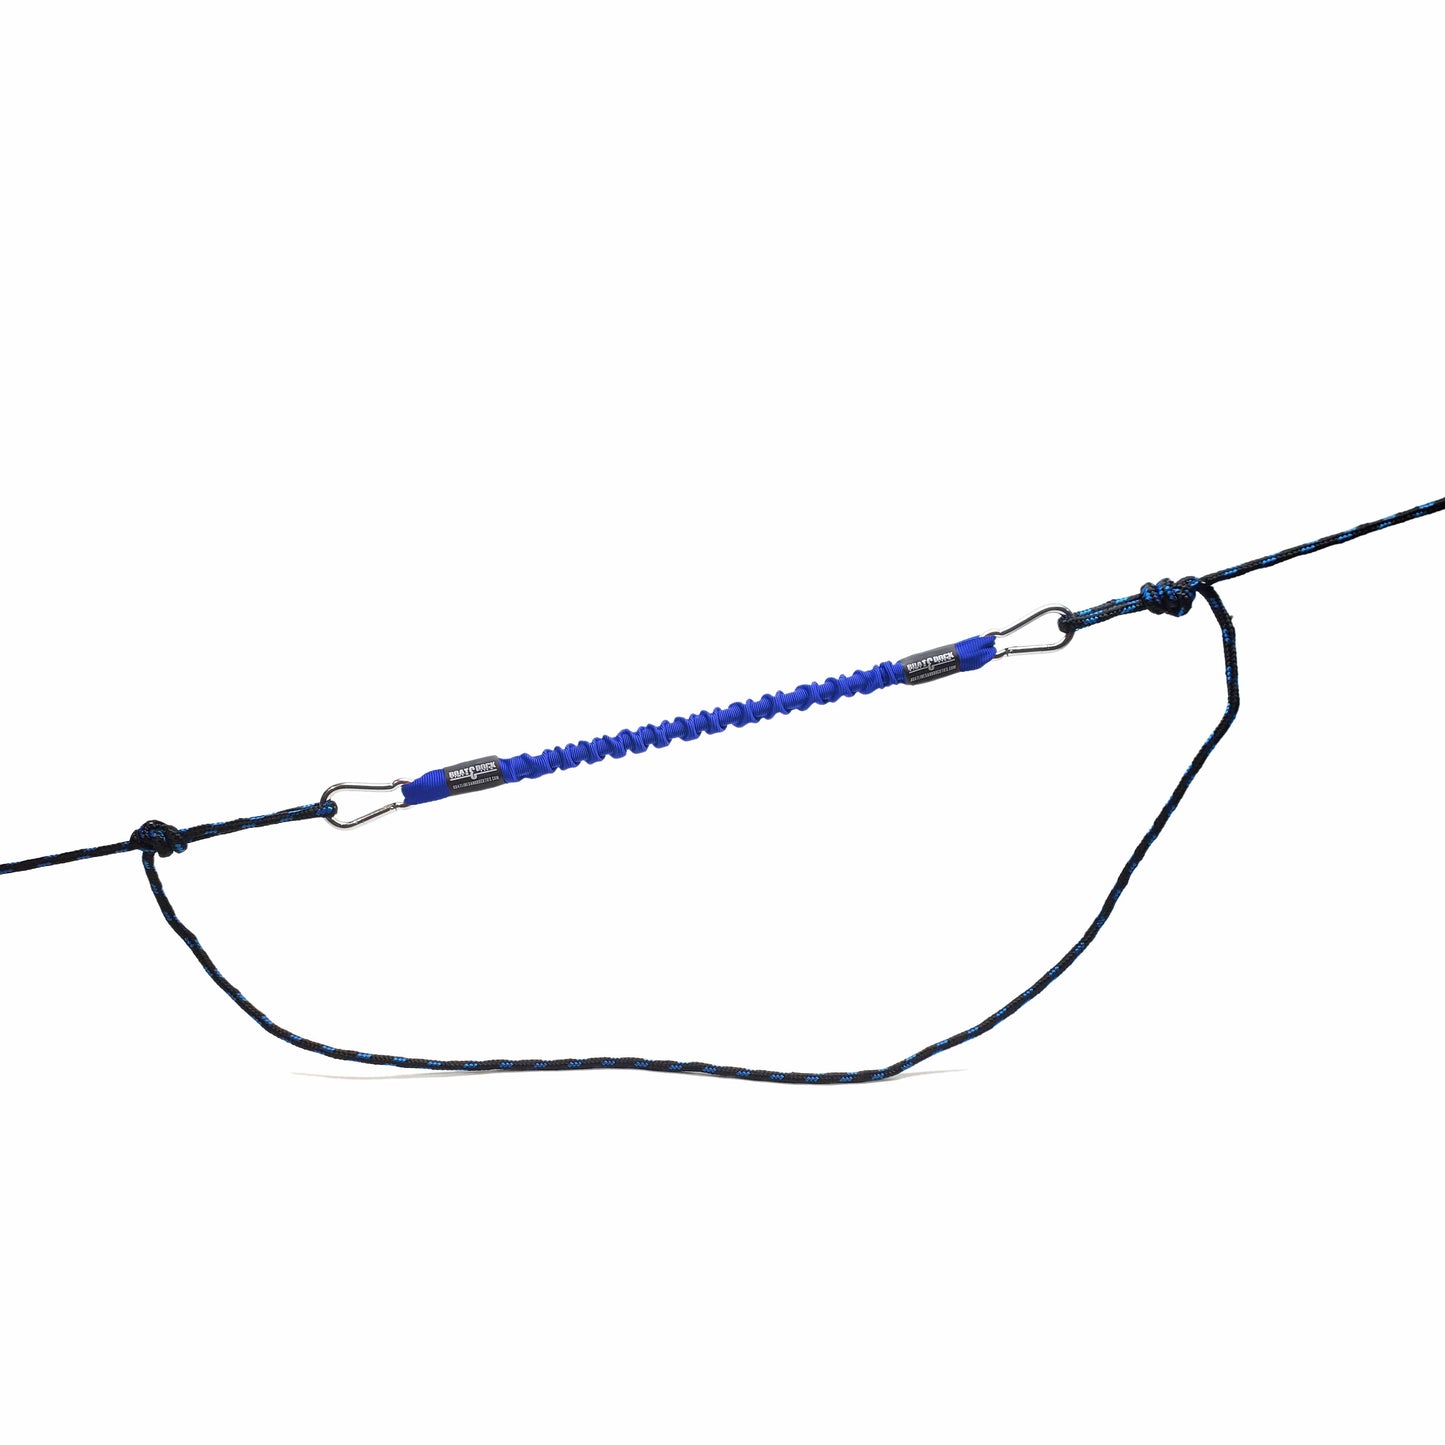 Bungee Snubber Dock Tie Line - With Stainless Steel Hooks - 1 per pack - Boat Lines & Dock Ties Boat Lines & Dock Ties 24inch / Blue